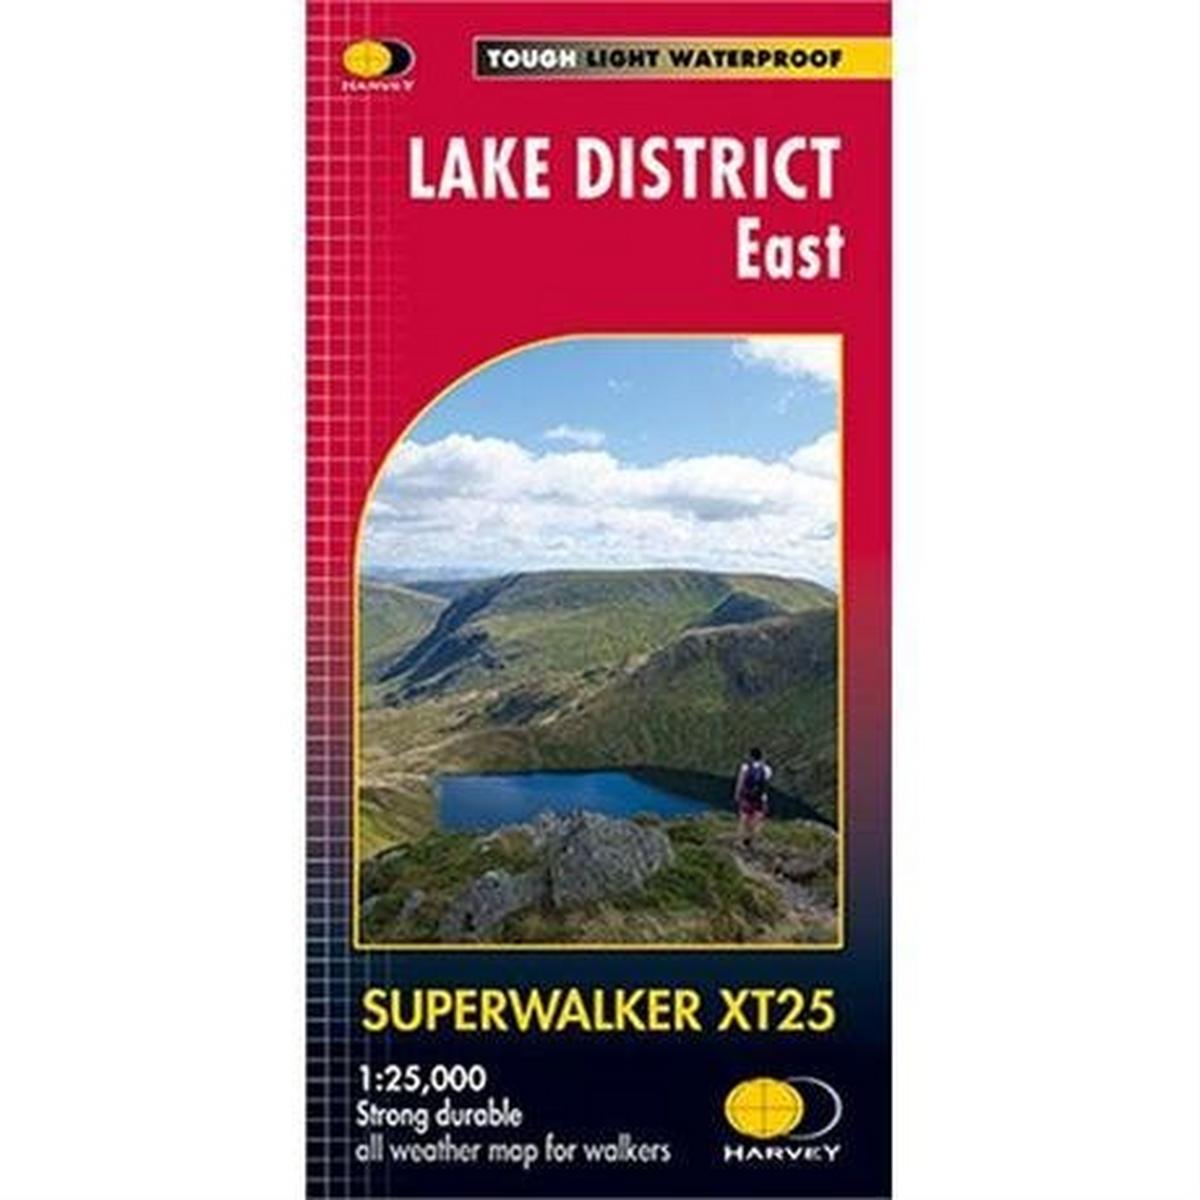 Harveys Harvey Map - Superwalker XT25: Lake District - East